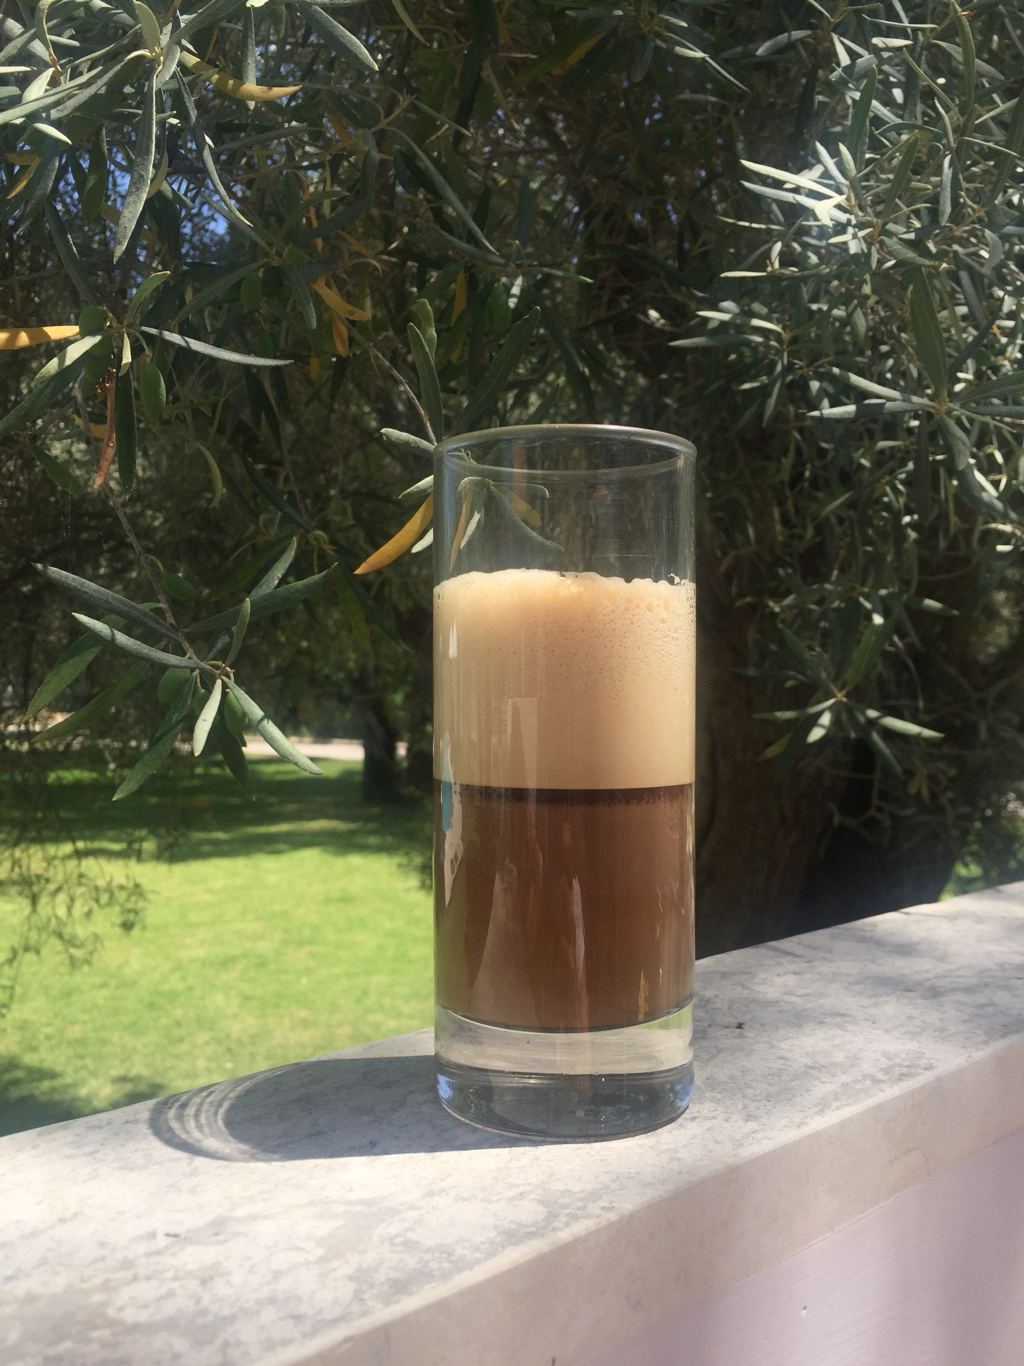 Clod brew Kaffee Eiskaffee